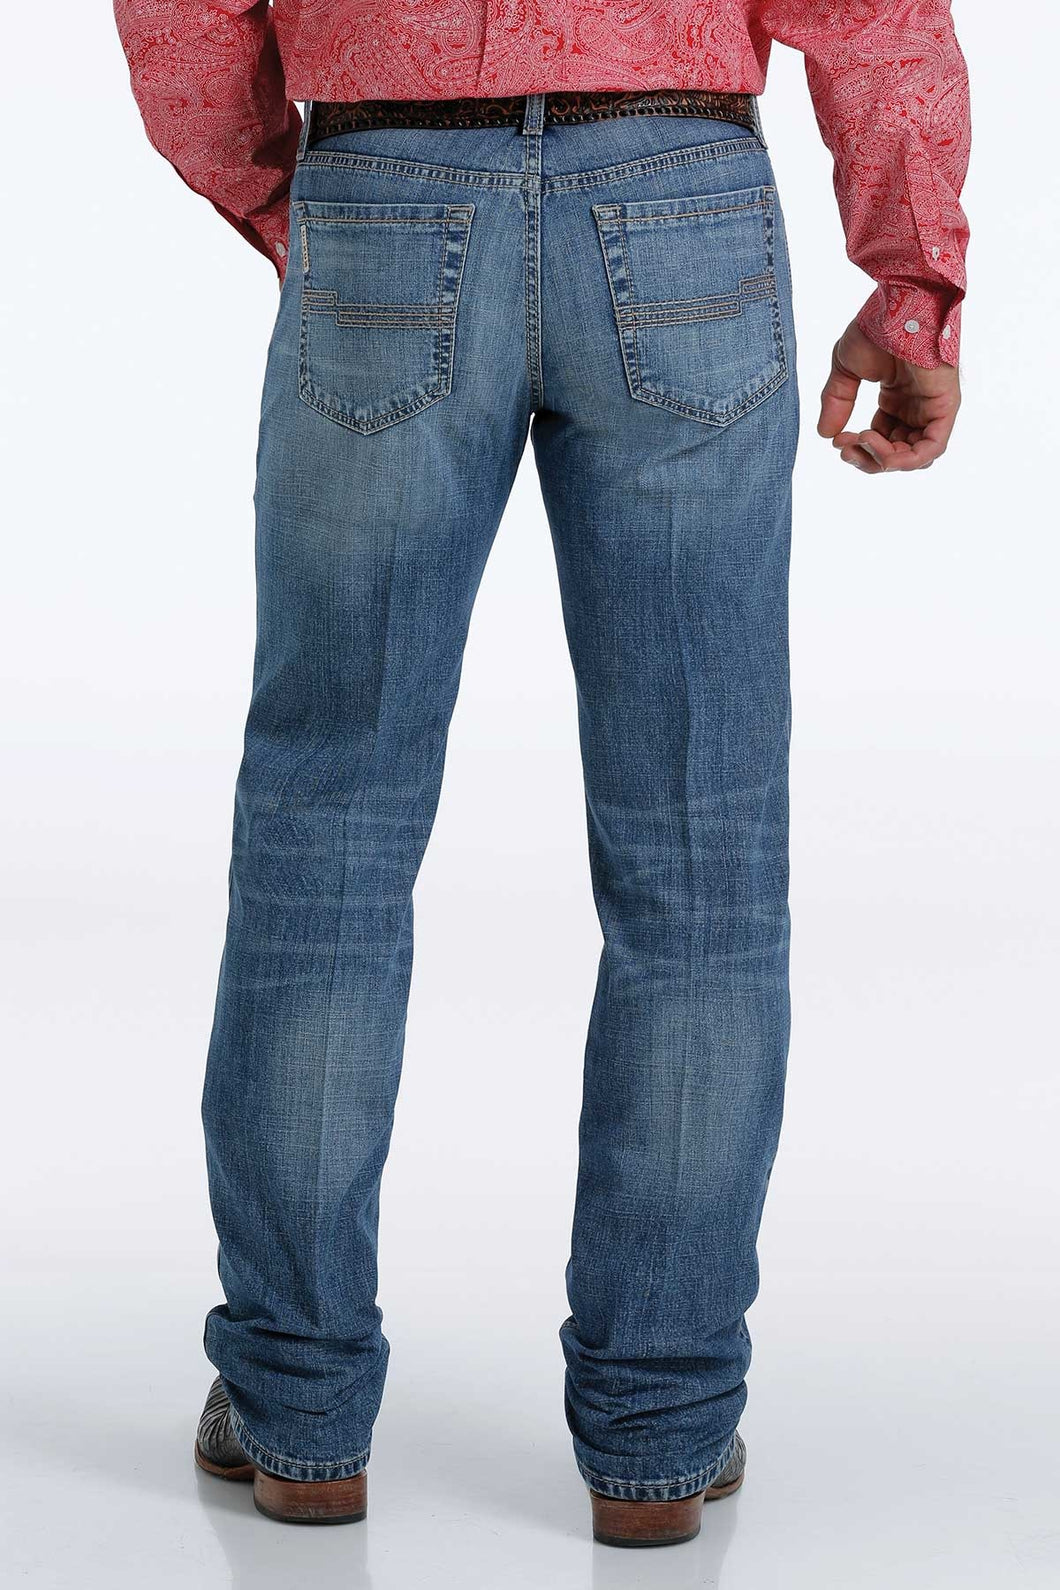 Cinch Men's Jesse Medium Stonewash Jean